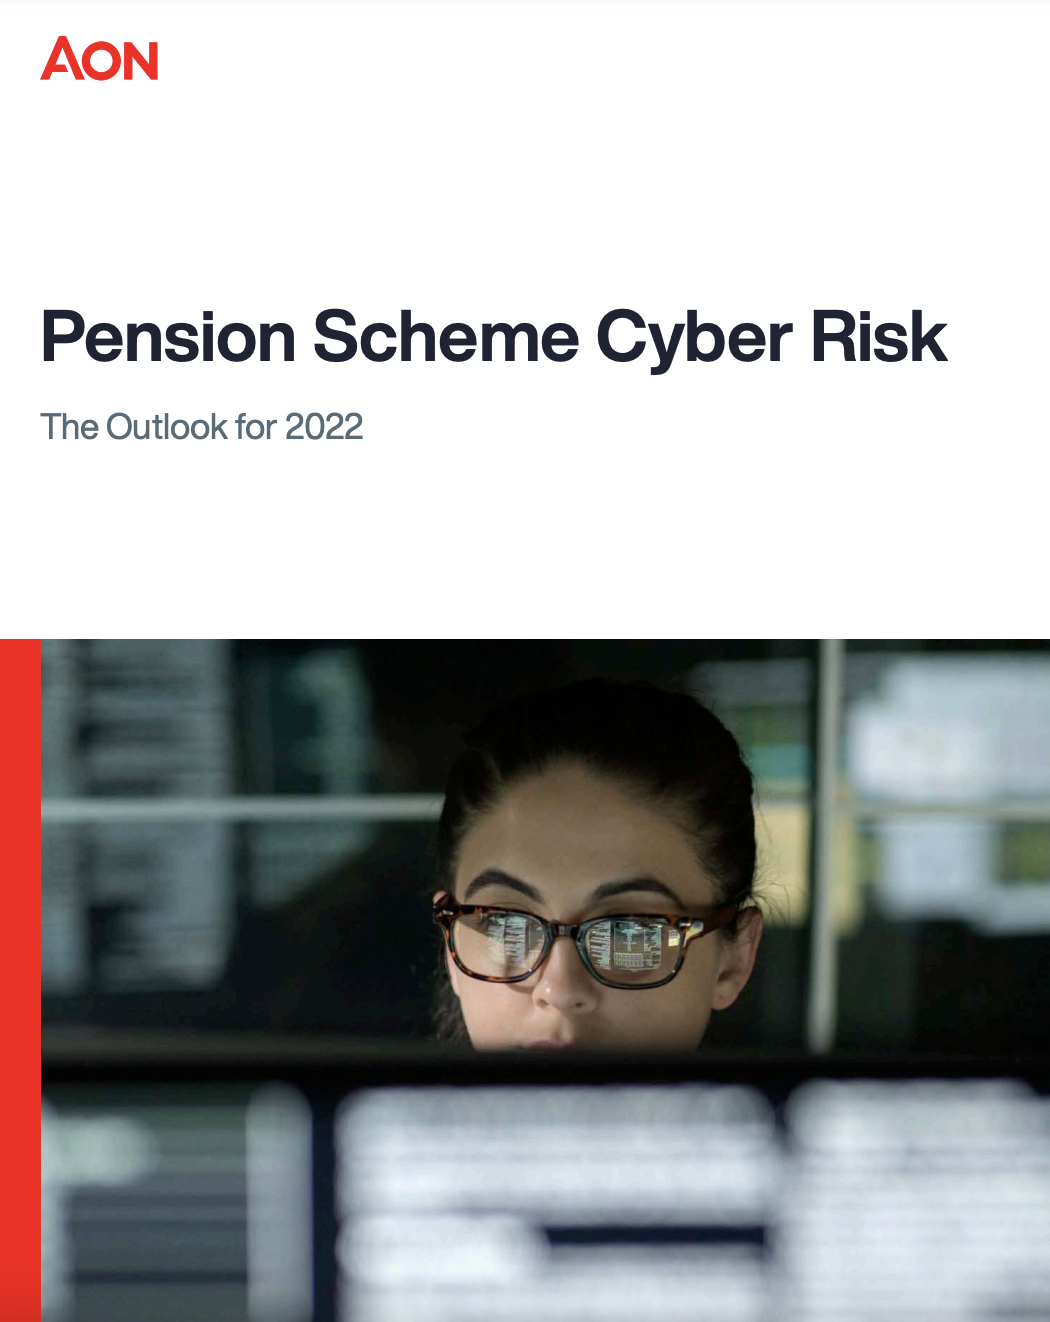 Pension scheme cyber risk 2022